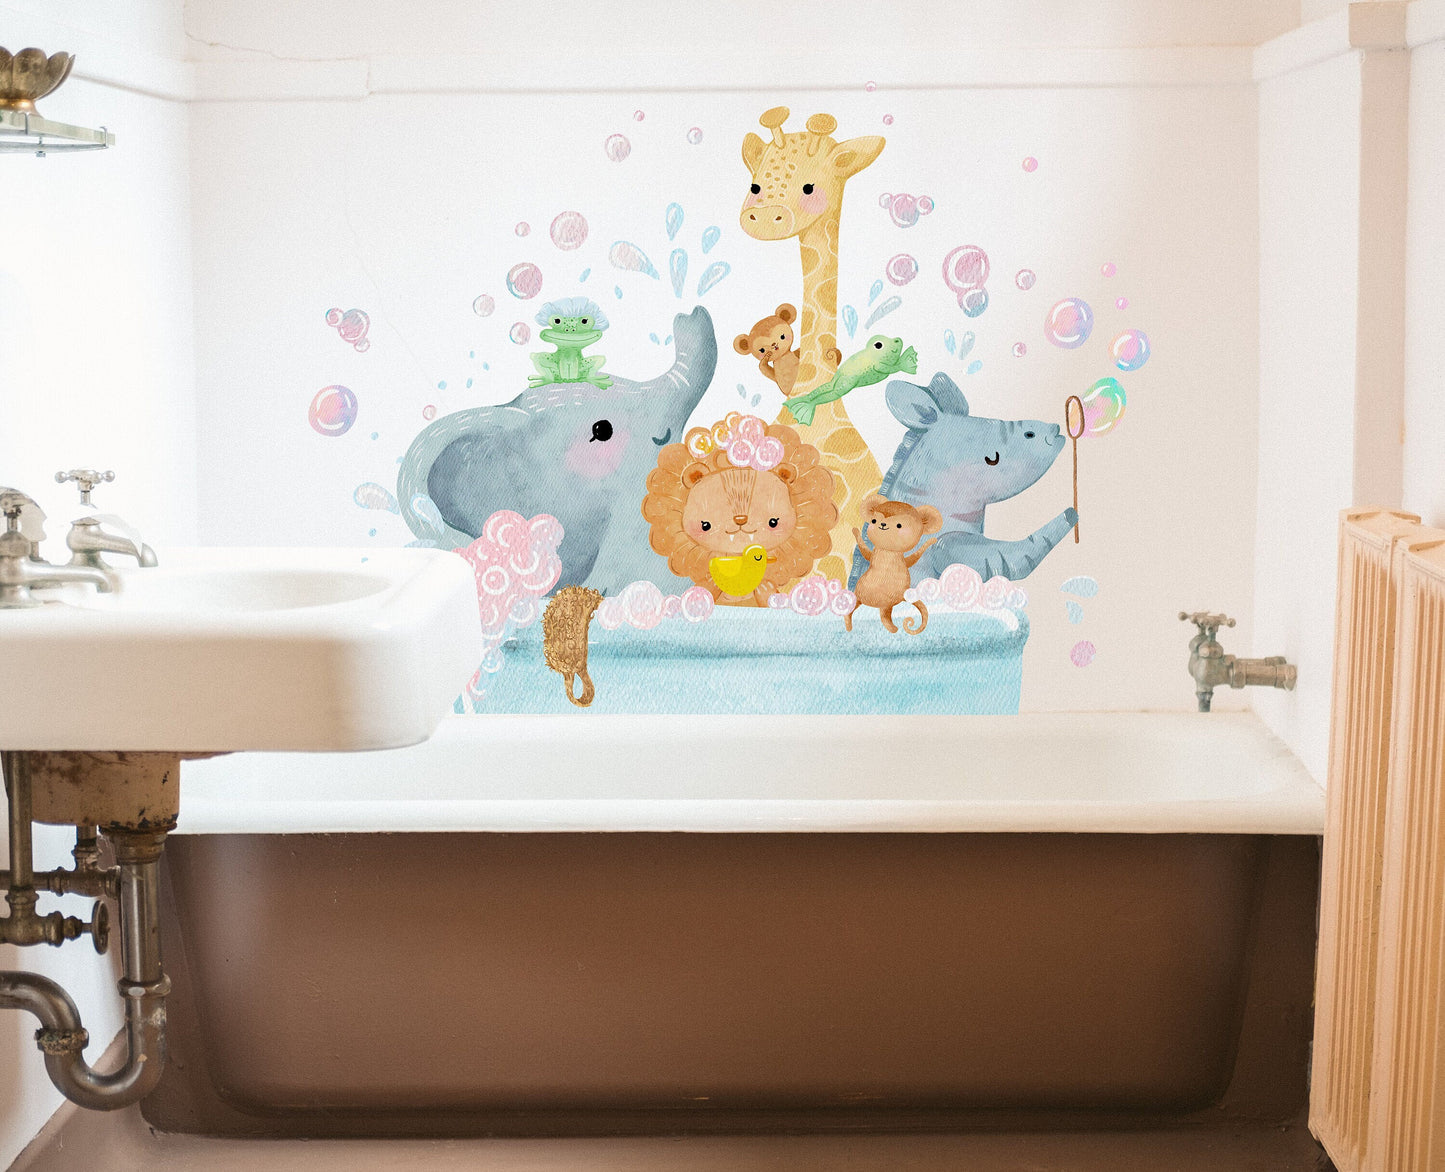 Safari Animals Bathroom Wall Decals Elephant Lion Giraffe Zebra Monkey Frogs Kids Stickers, LF452